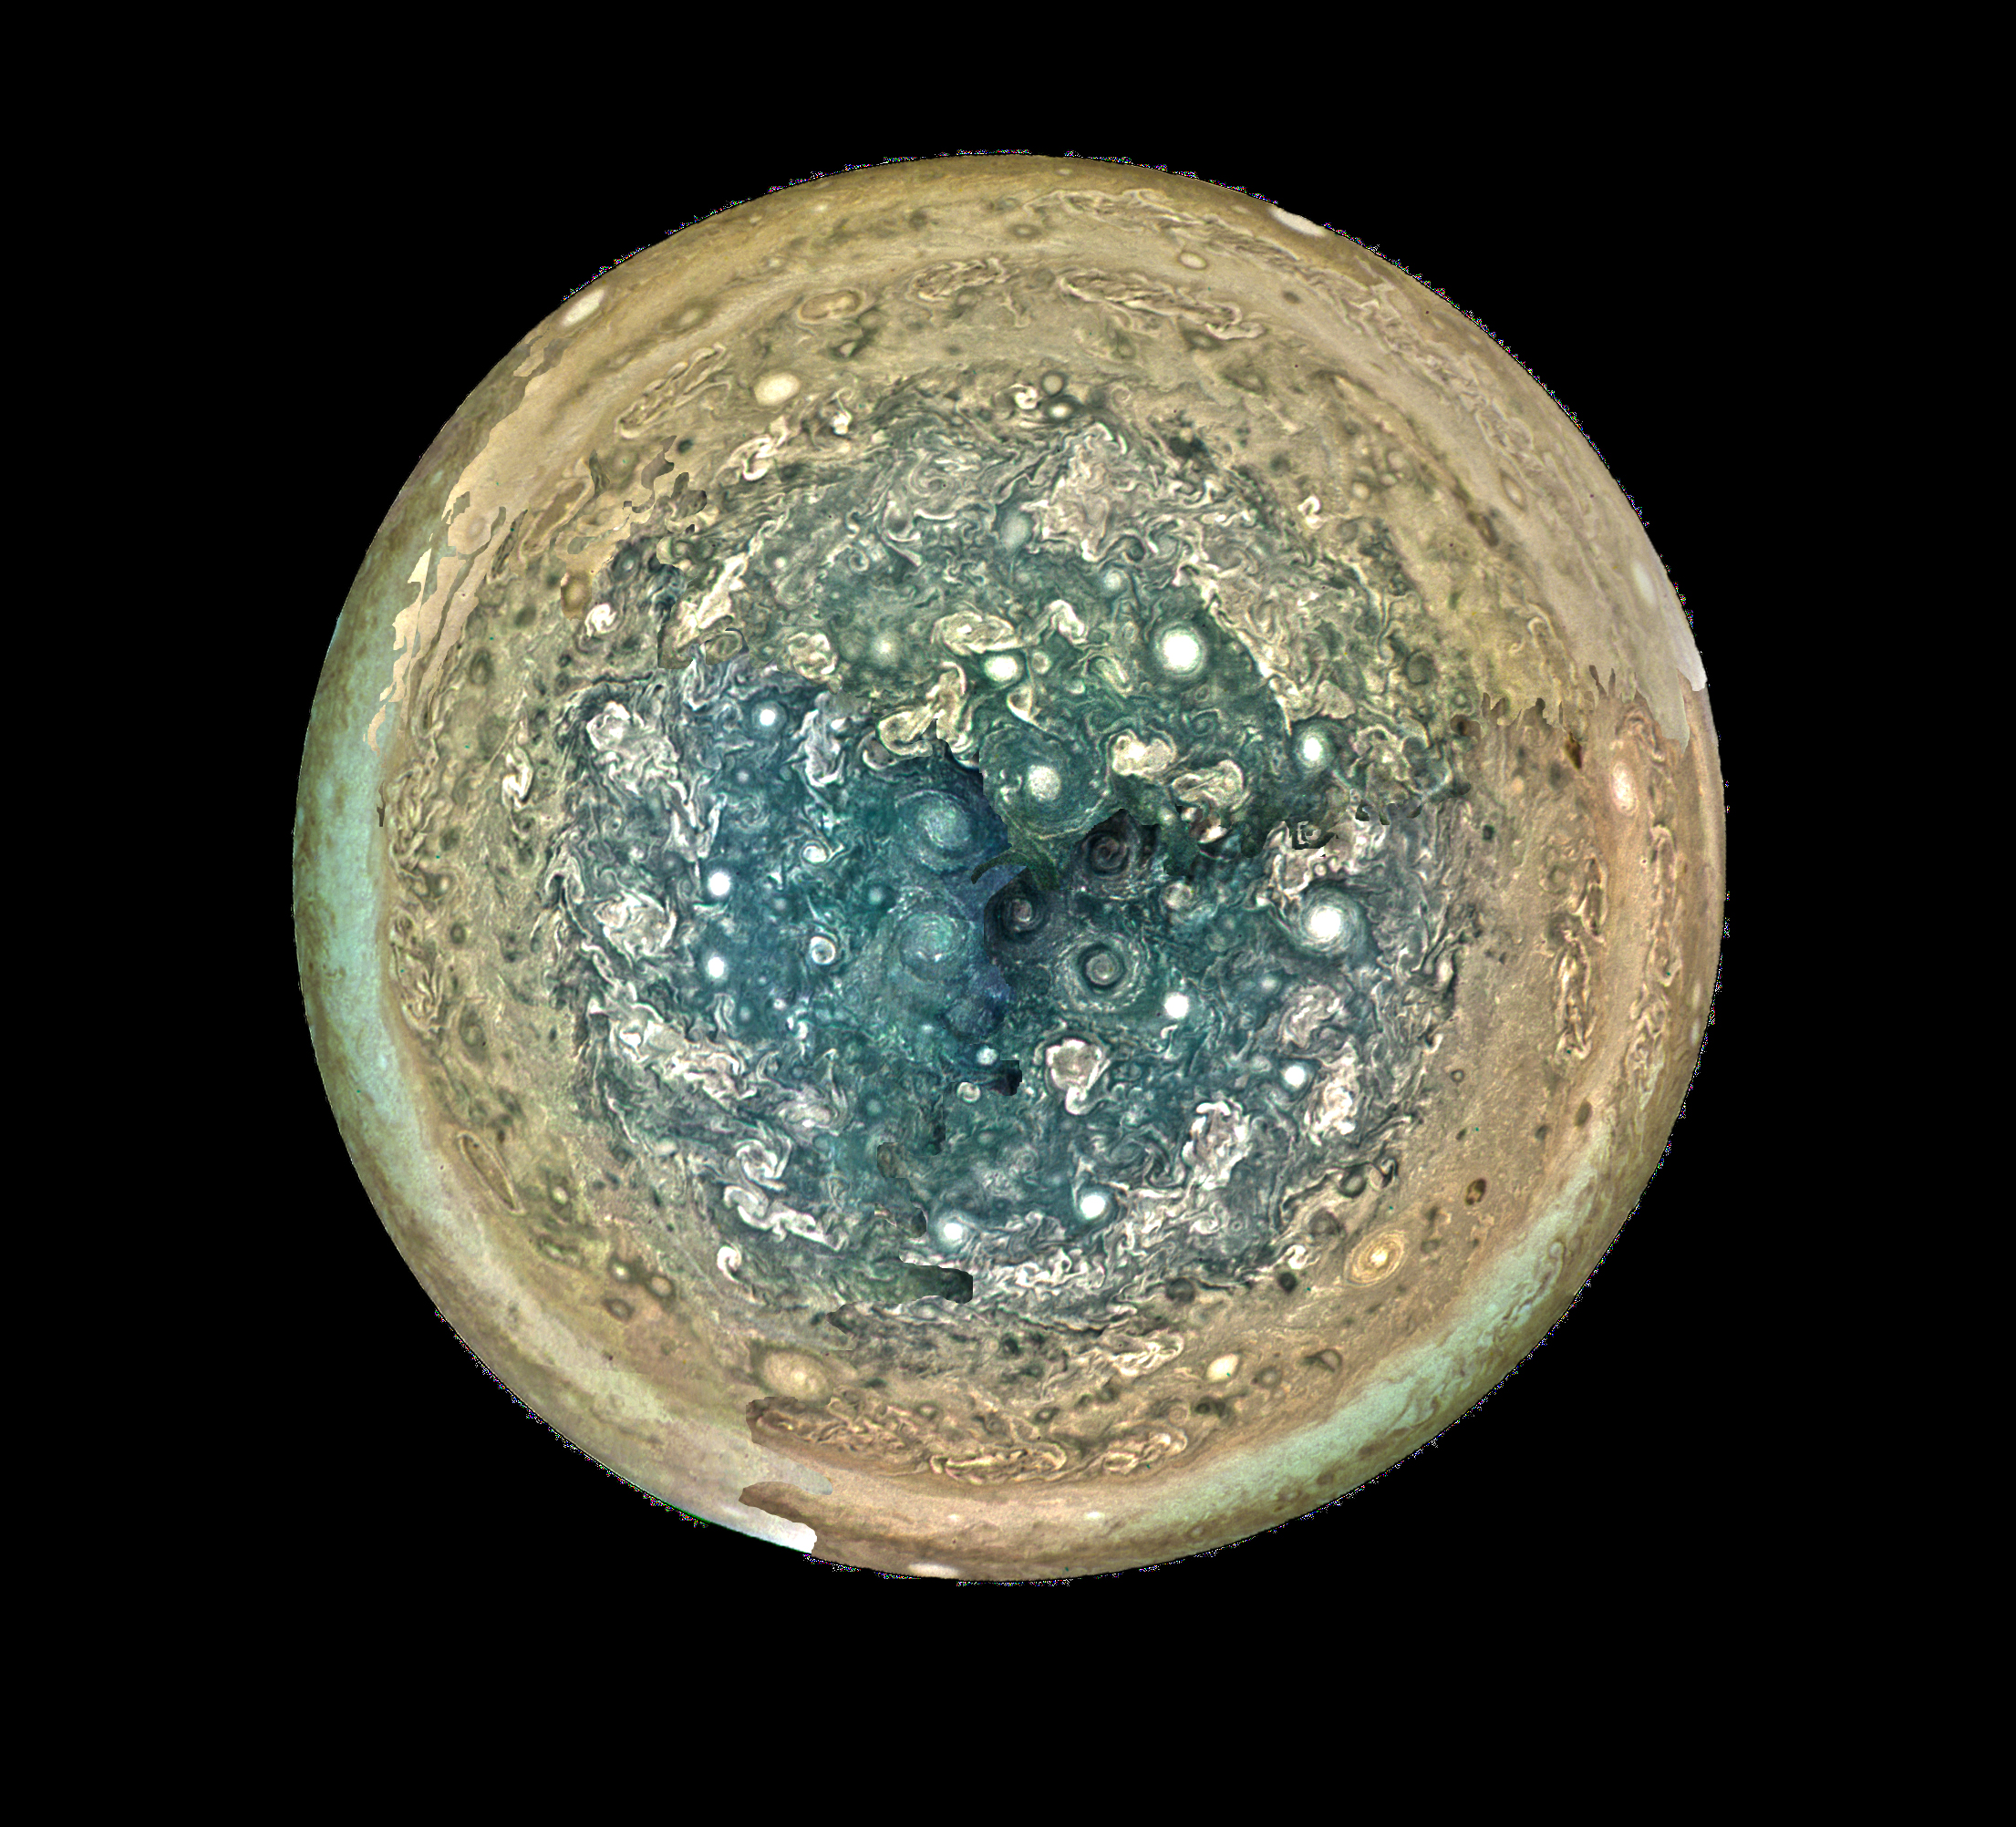 Mozaik fotografija površine Jupitera sa zadnja 3 kruženja sonde